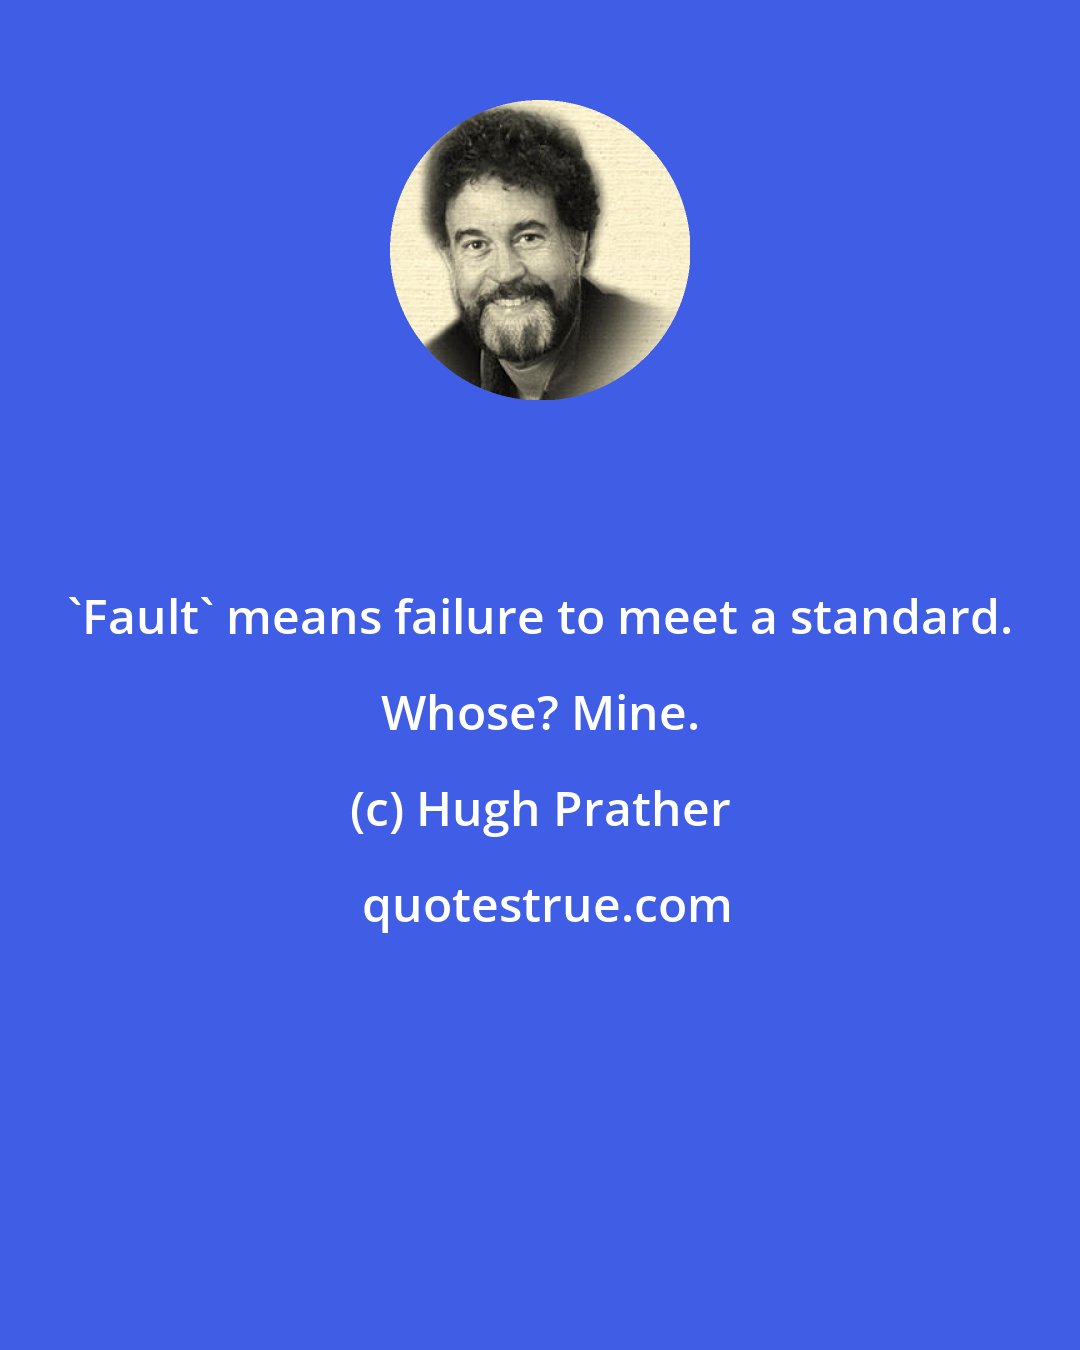 Hugh Prather: 'Fault' means failure to meet a standard. Whose? Mine.